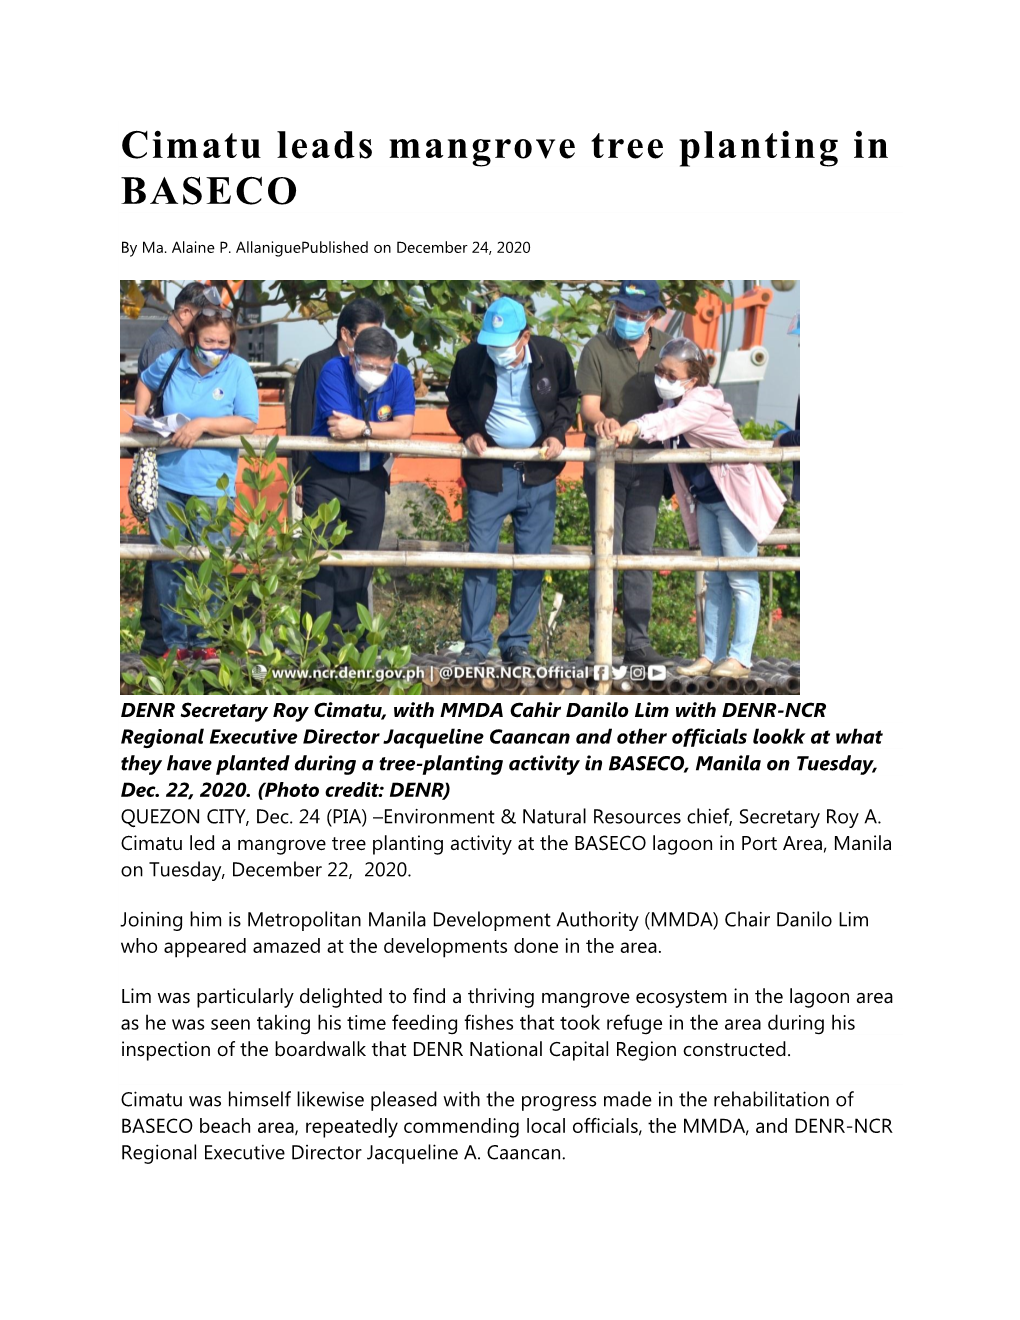 Cimatu Leads Mangrove Tree Planting in BASECO